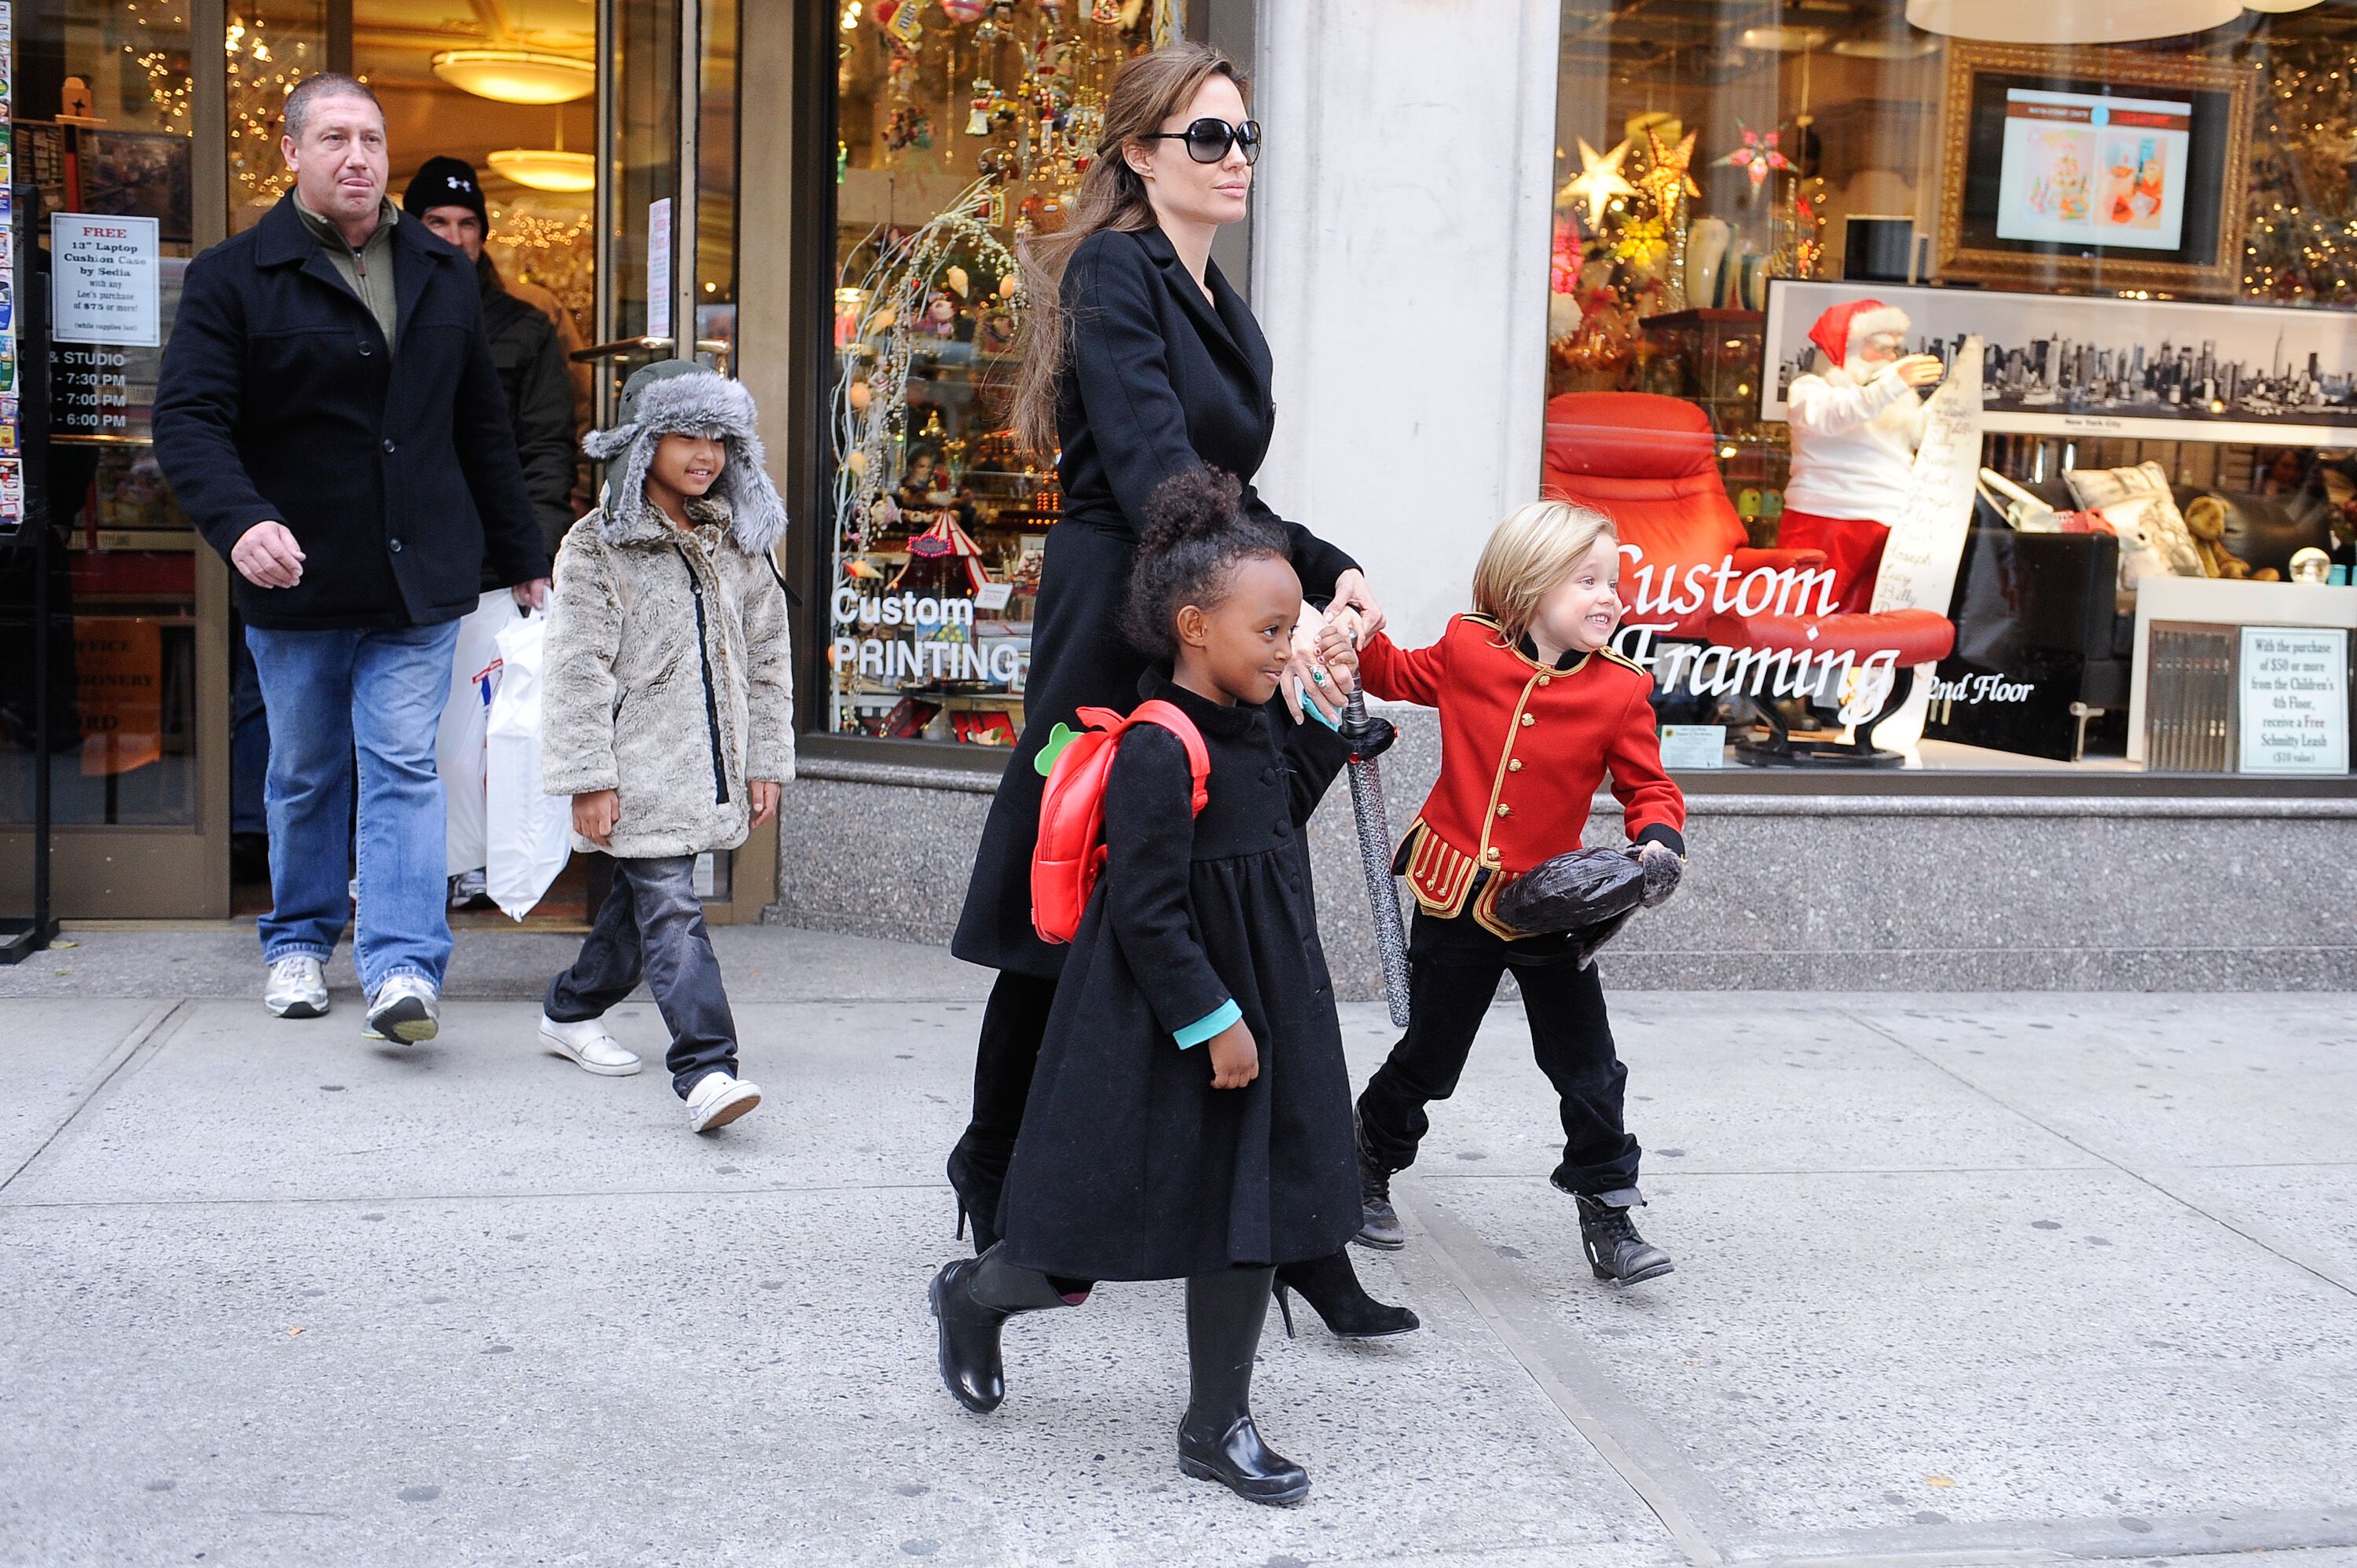 Maddox Jolie-Pitt, actress Angelina Jolie, Zahara Jolie-Pitt, and Shiloh Jolie-Pitt shopping in 2010 in New York City | Source: Getty Images